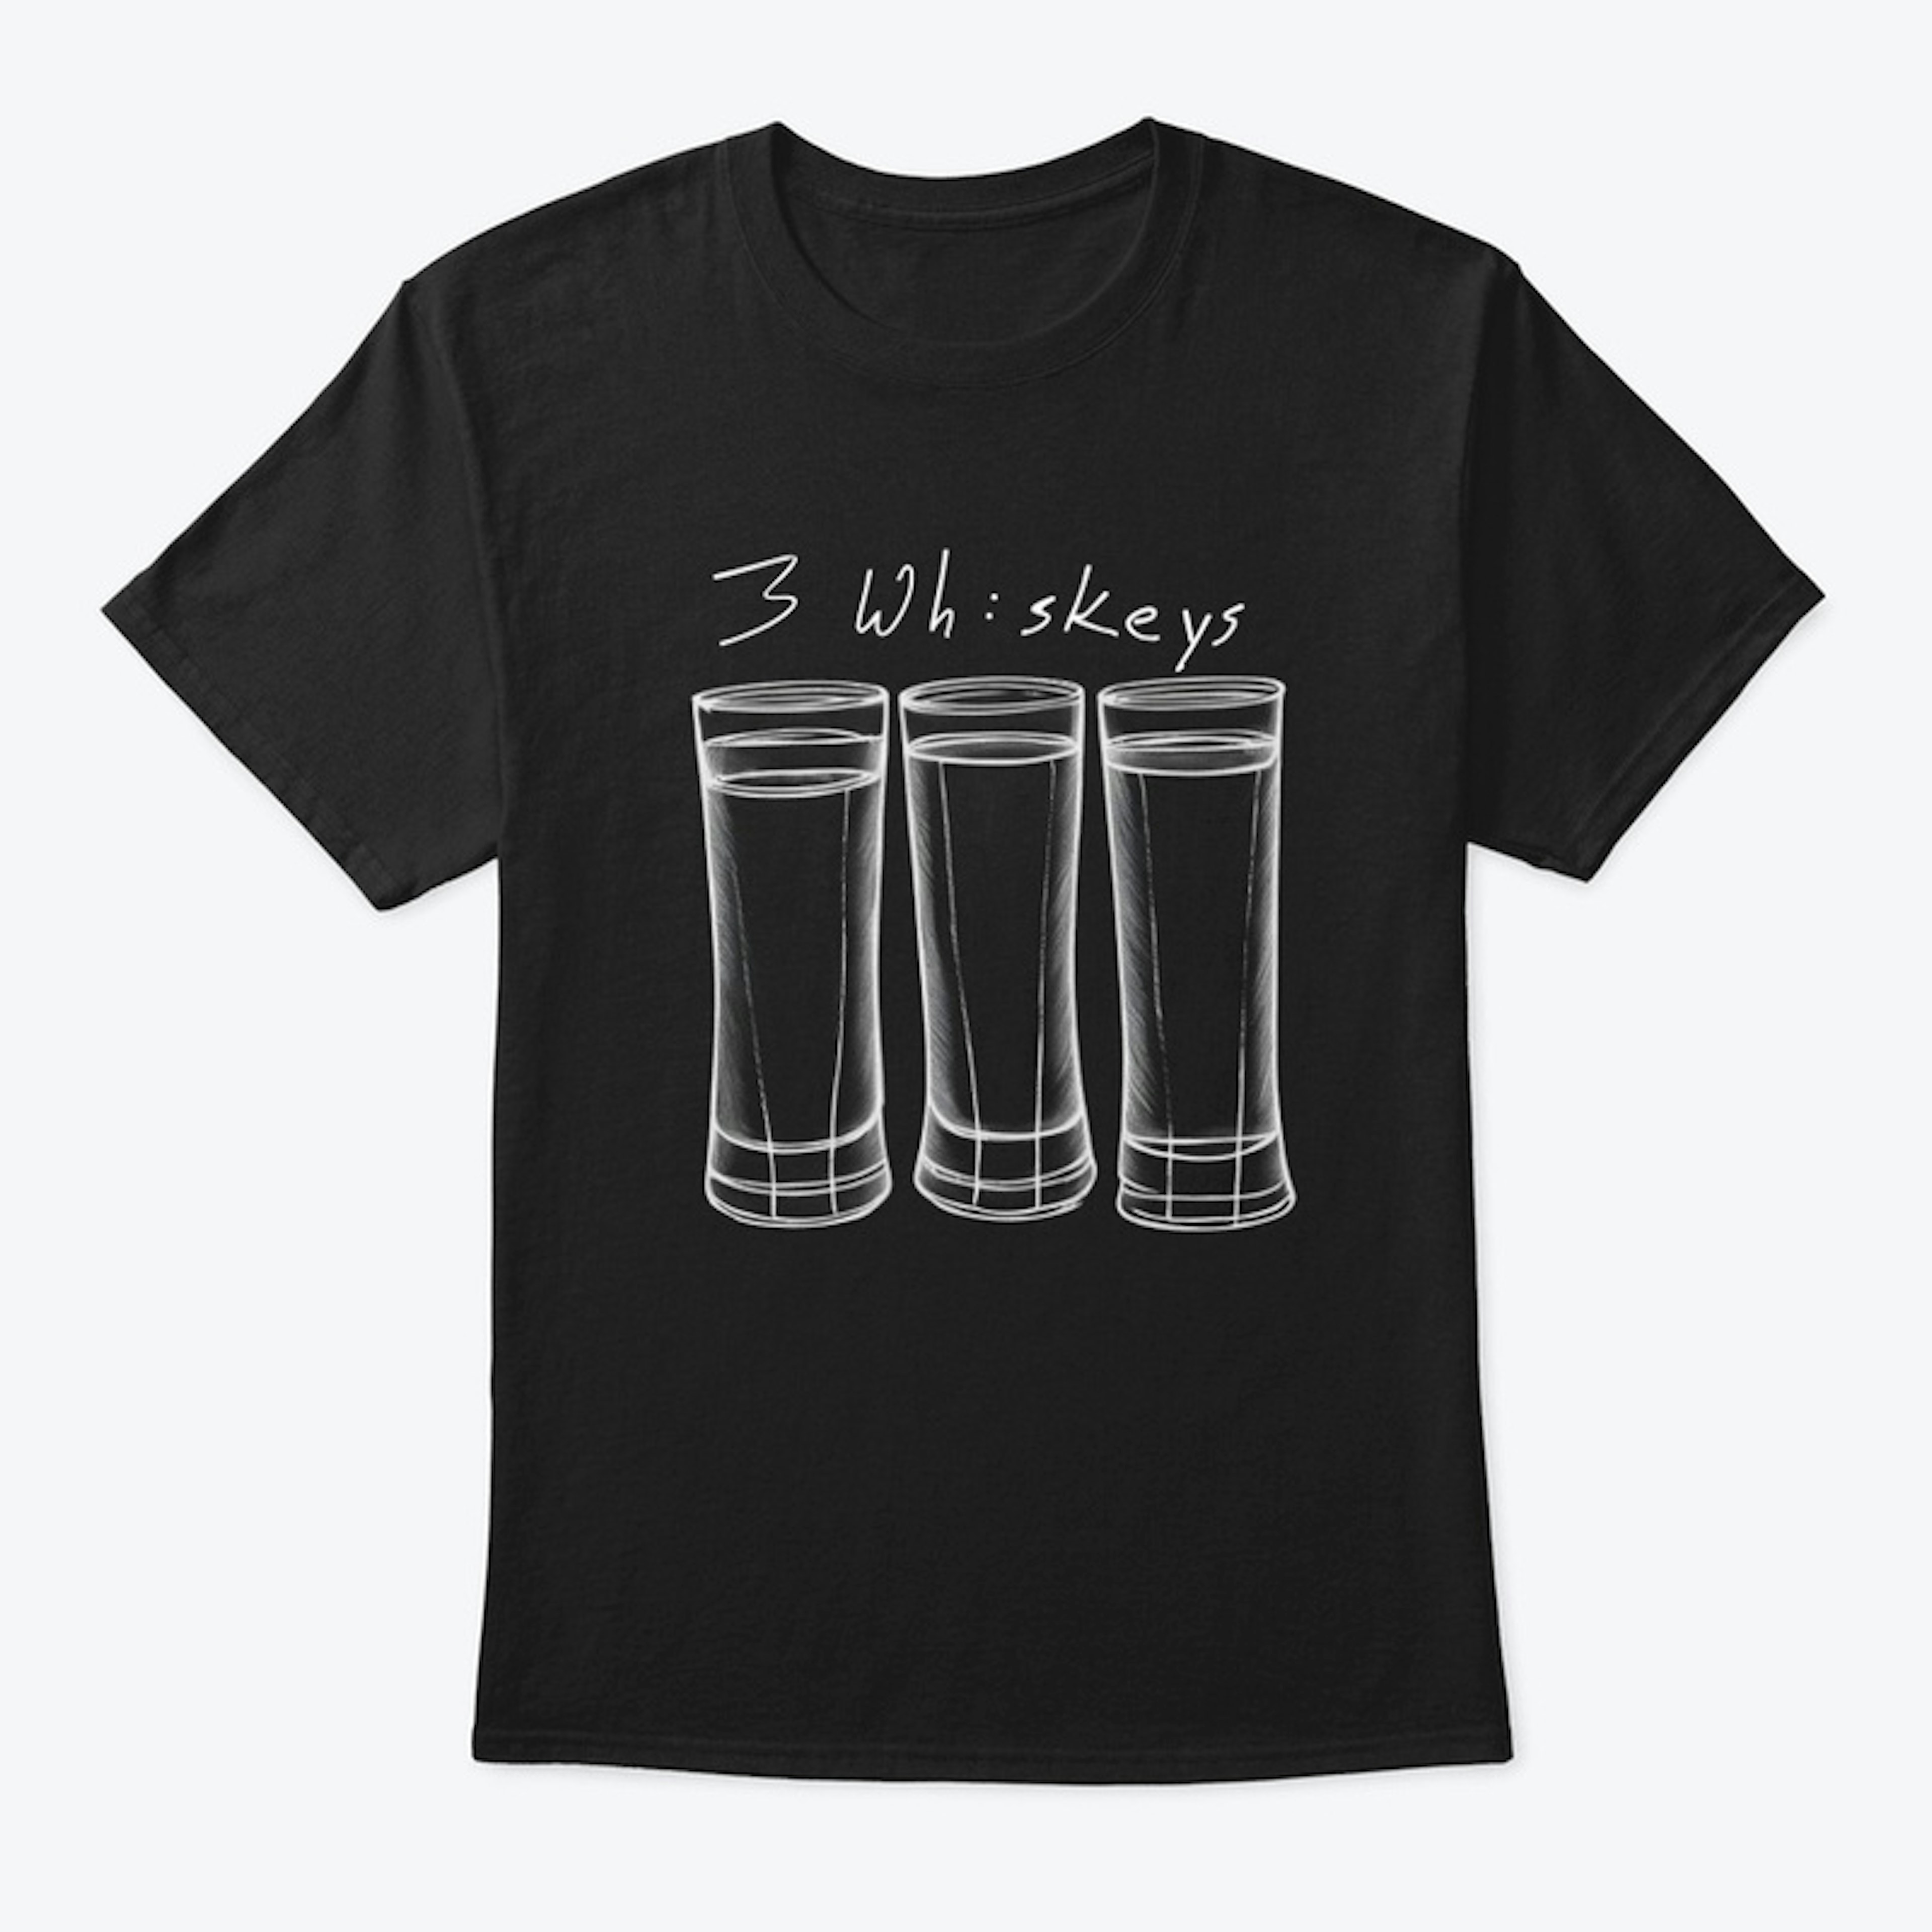 3 Whiskeys shirt